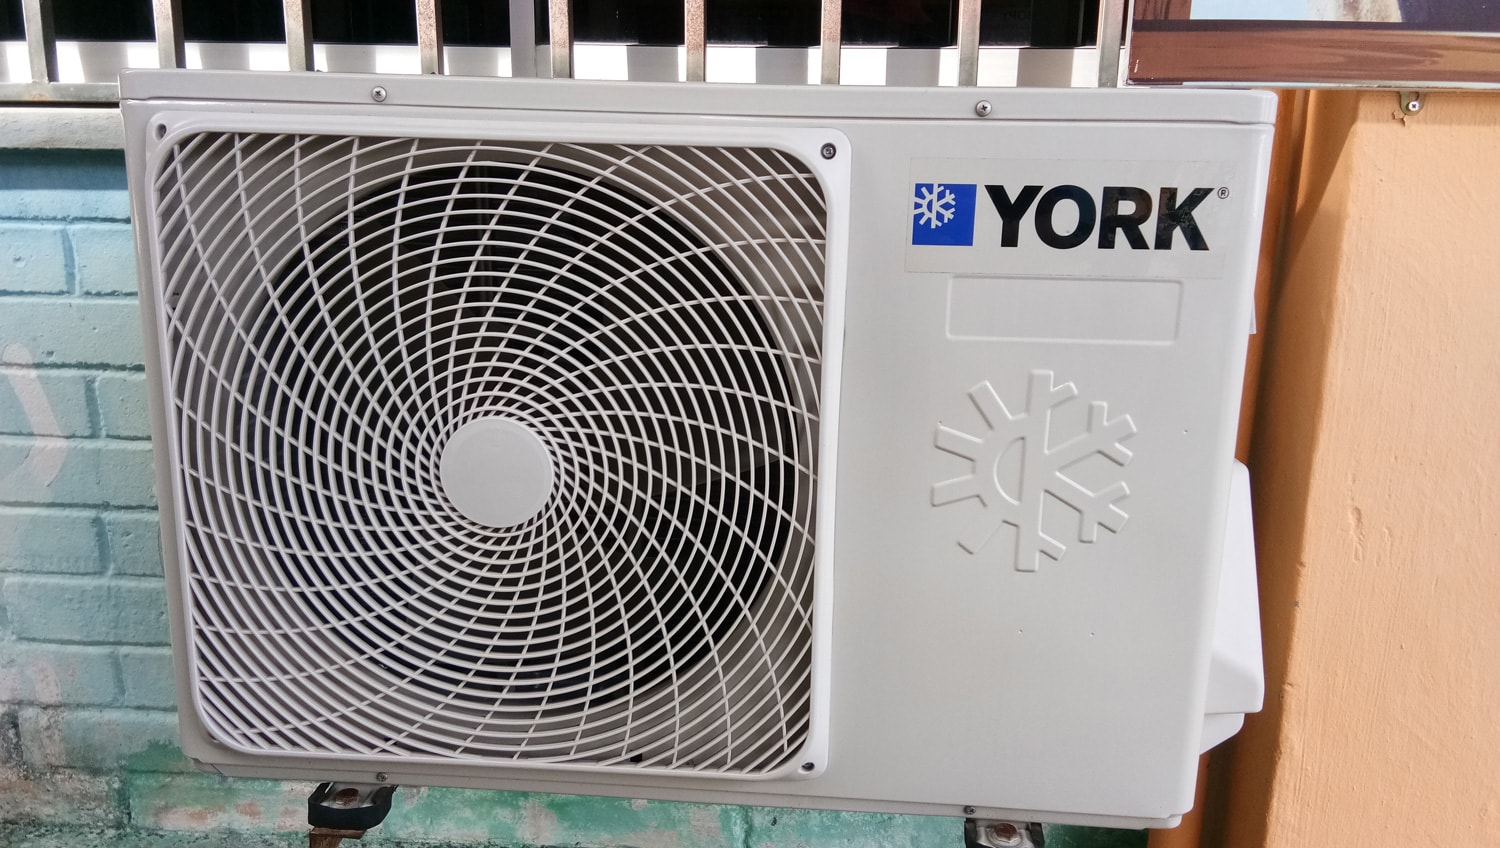 York Air conditioner. 